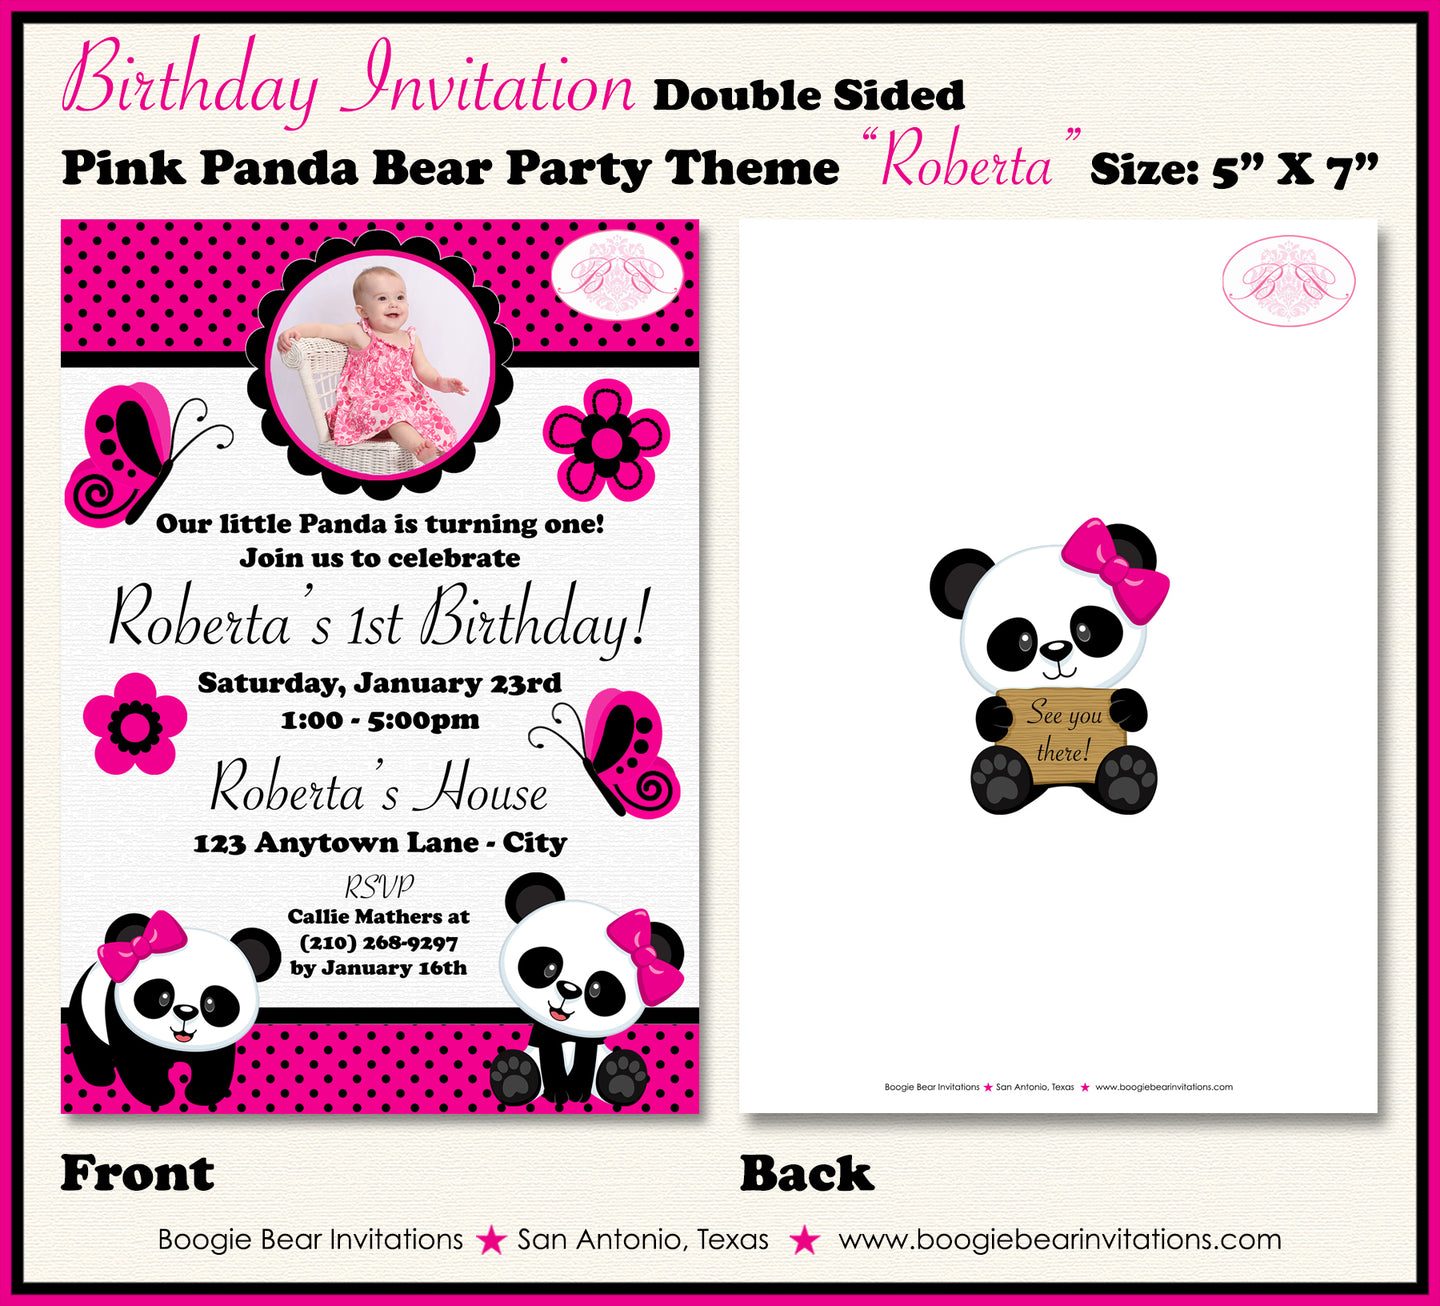 Panda Bear Birthday Party Invitation Photo Girl Little Pink Black Wild Zoo Boogie Bear Invitations Roberta Theme Paperless Printable Printed